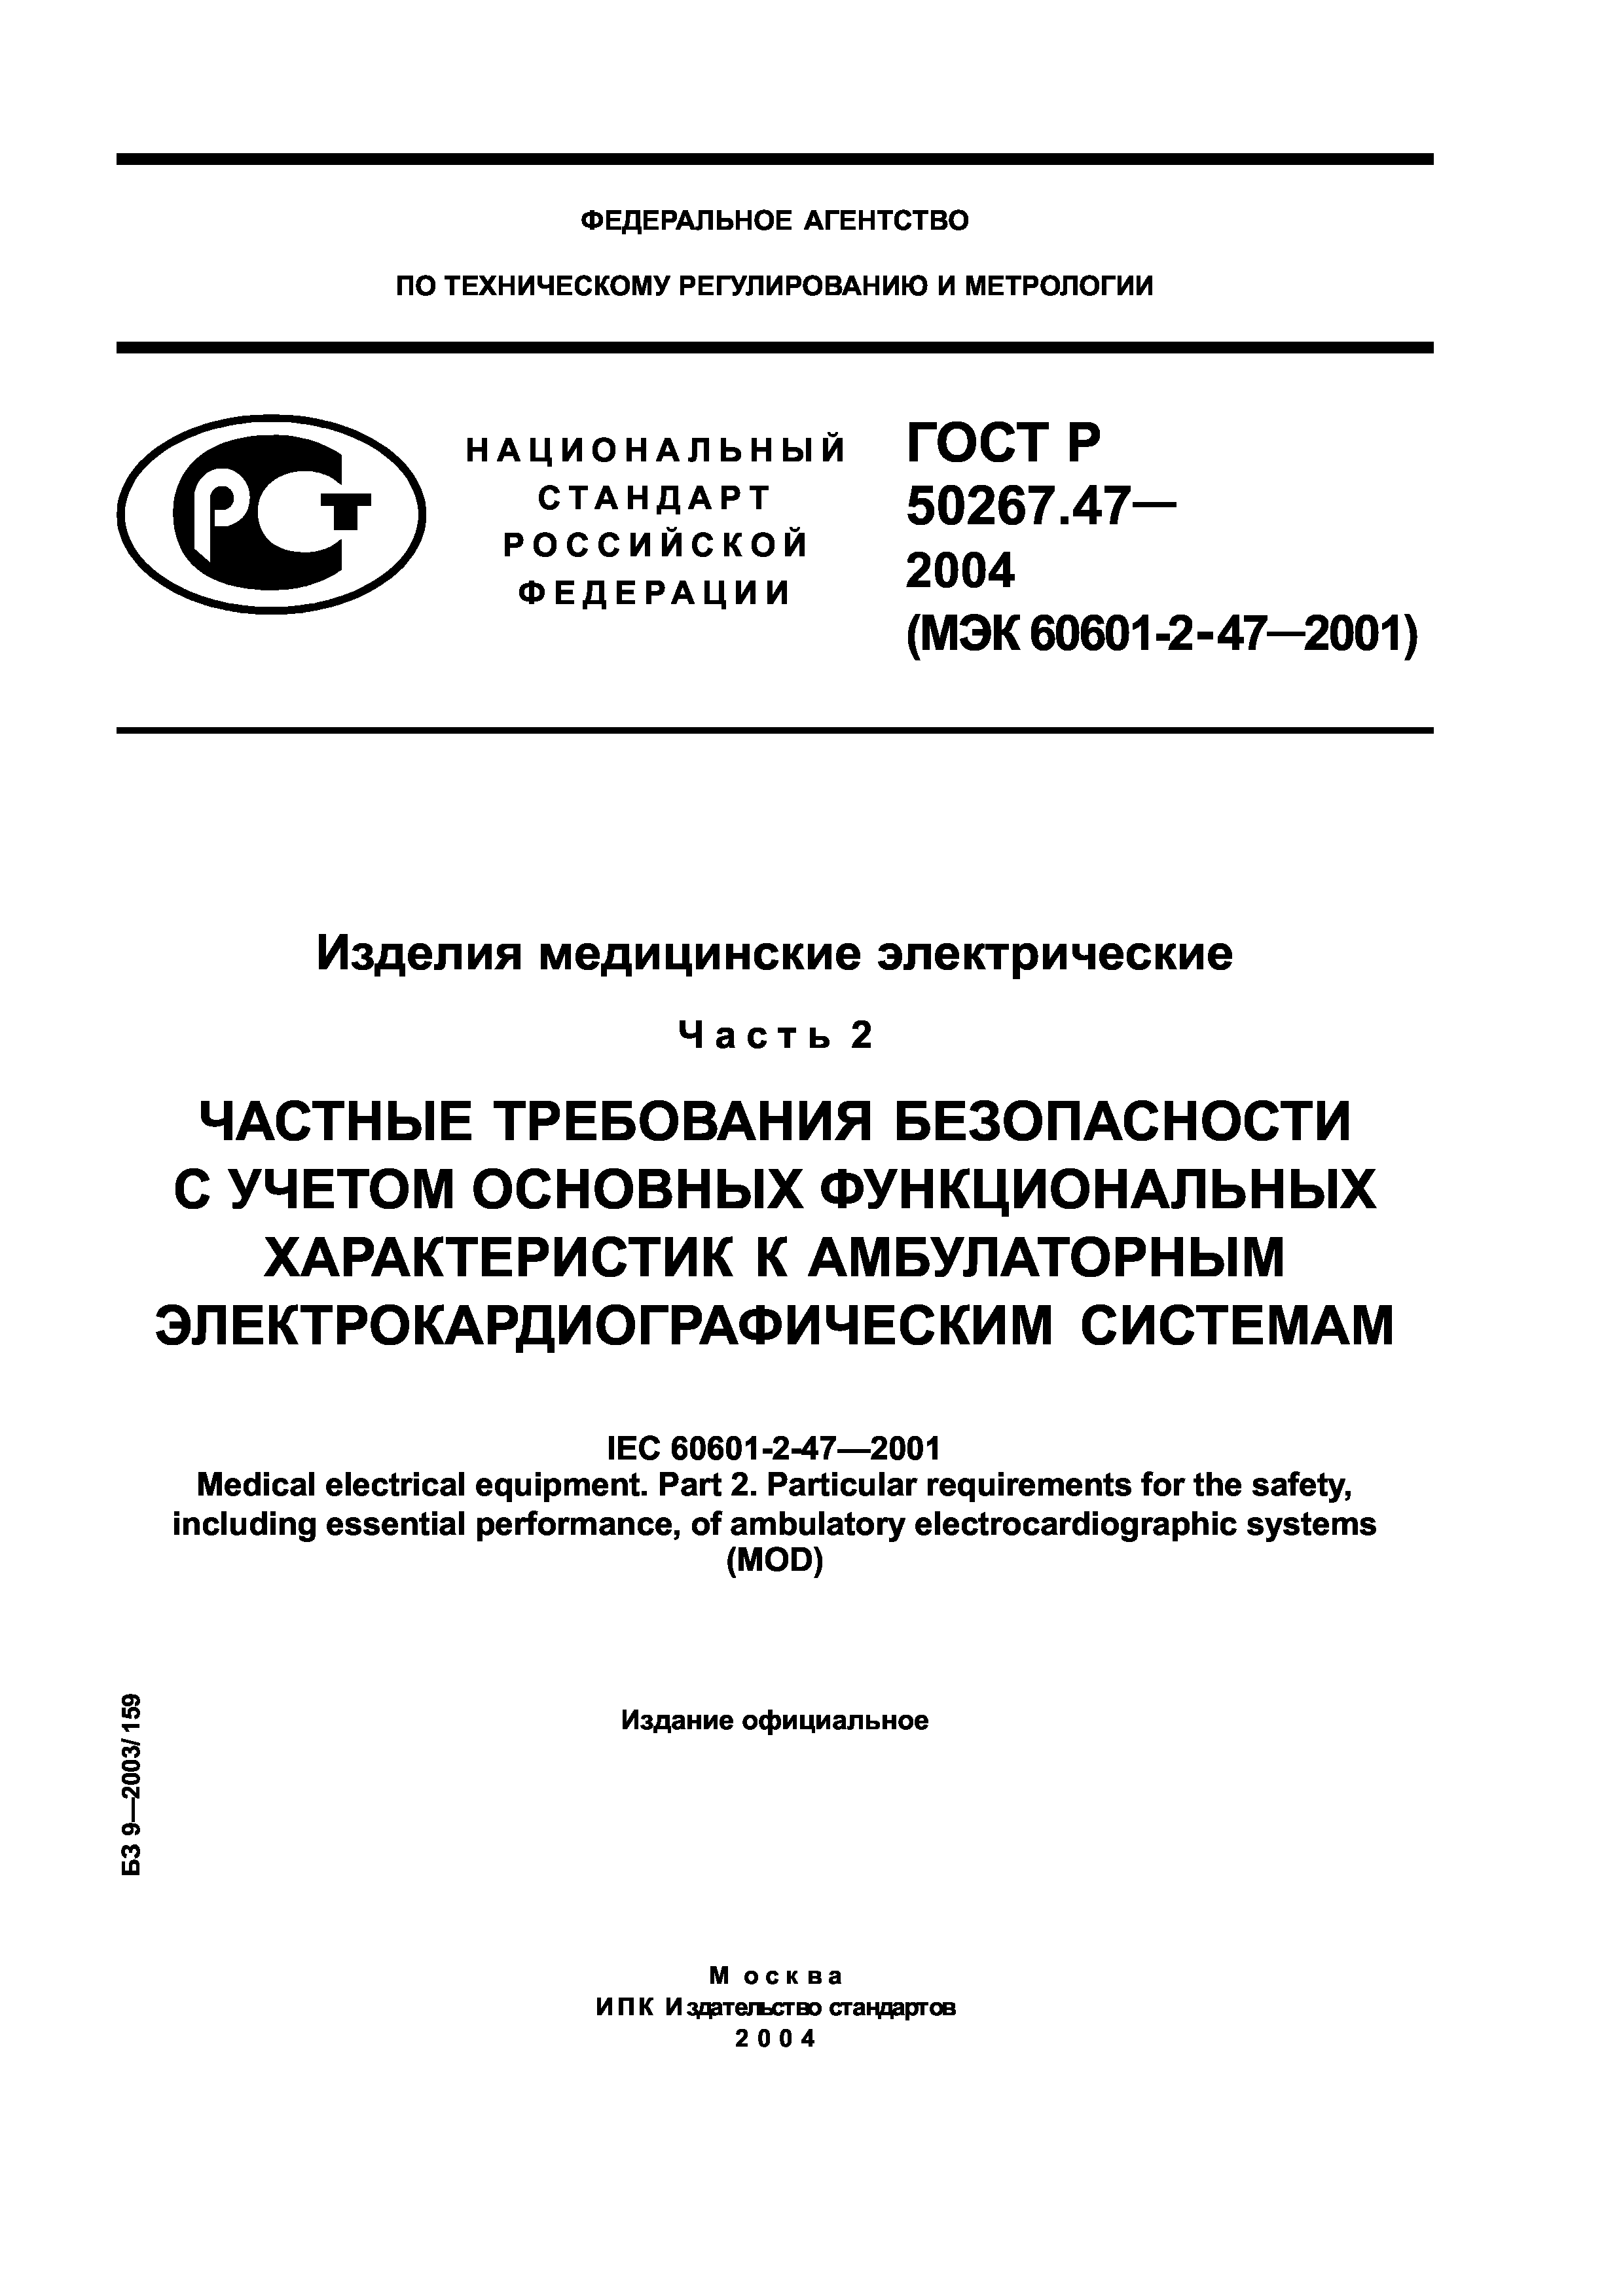 ГОСТ Р 50267.47-2004